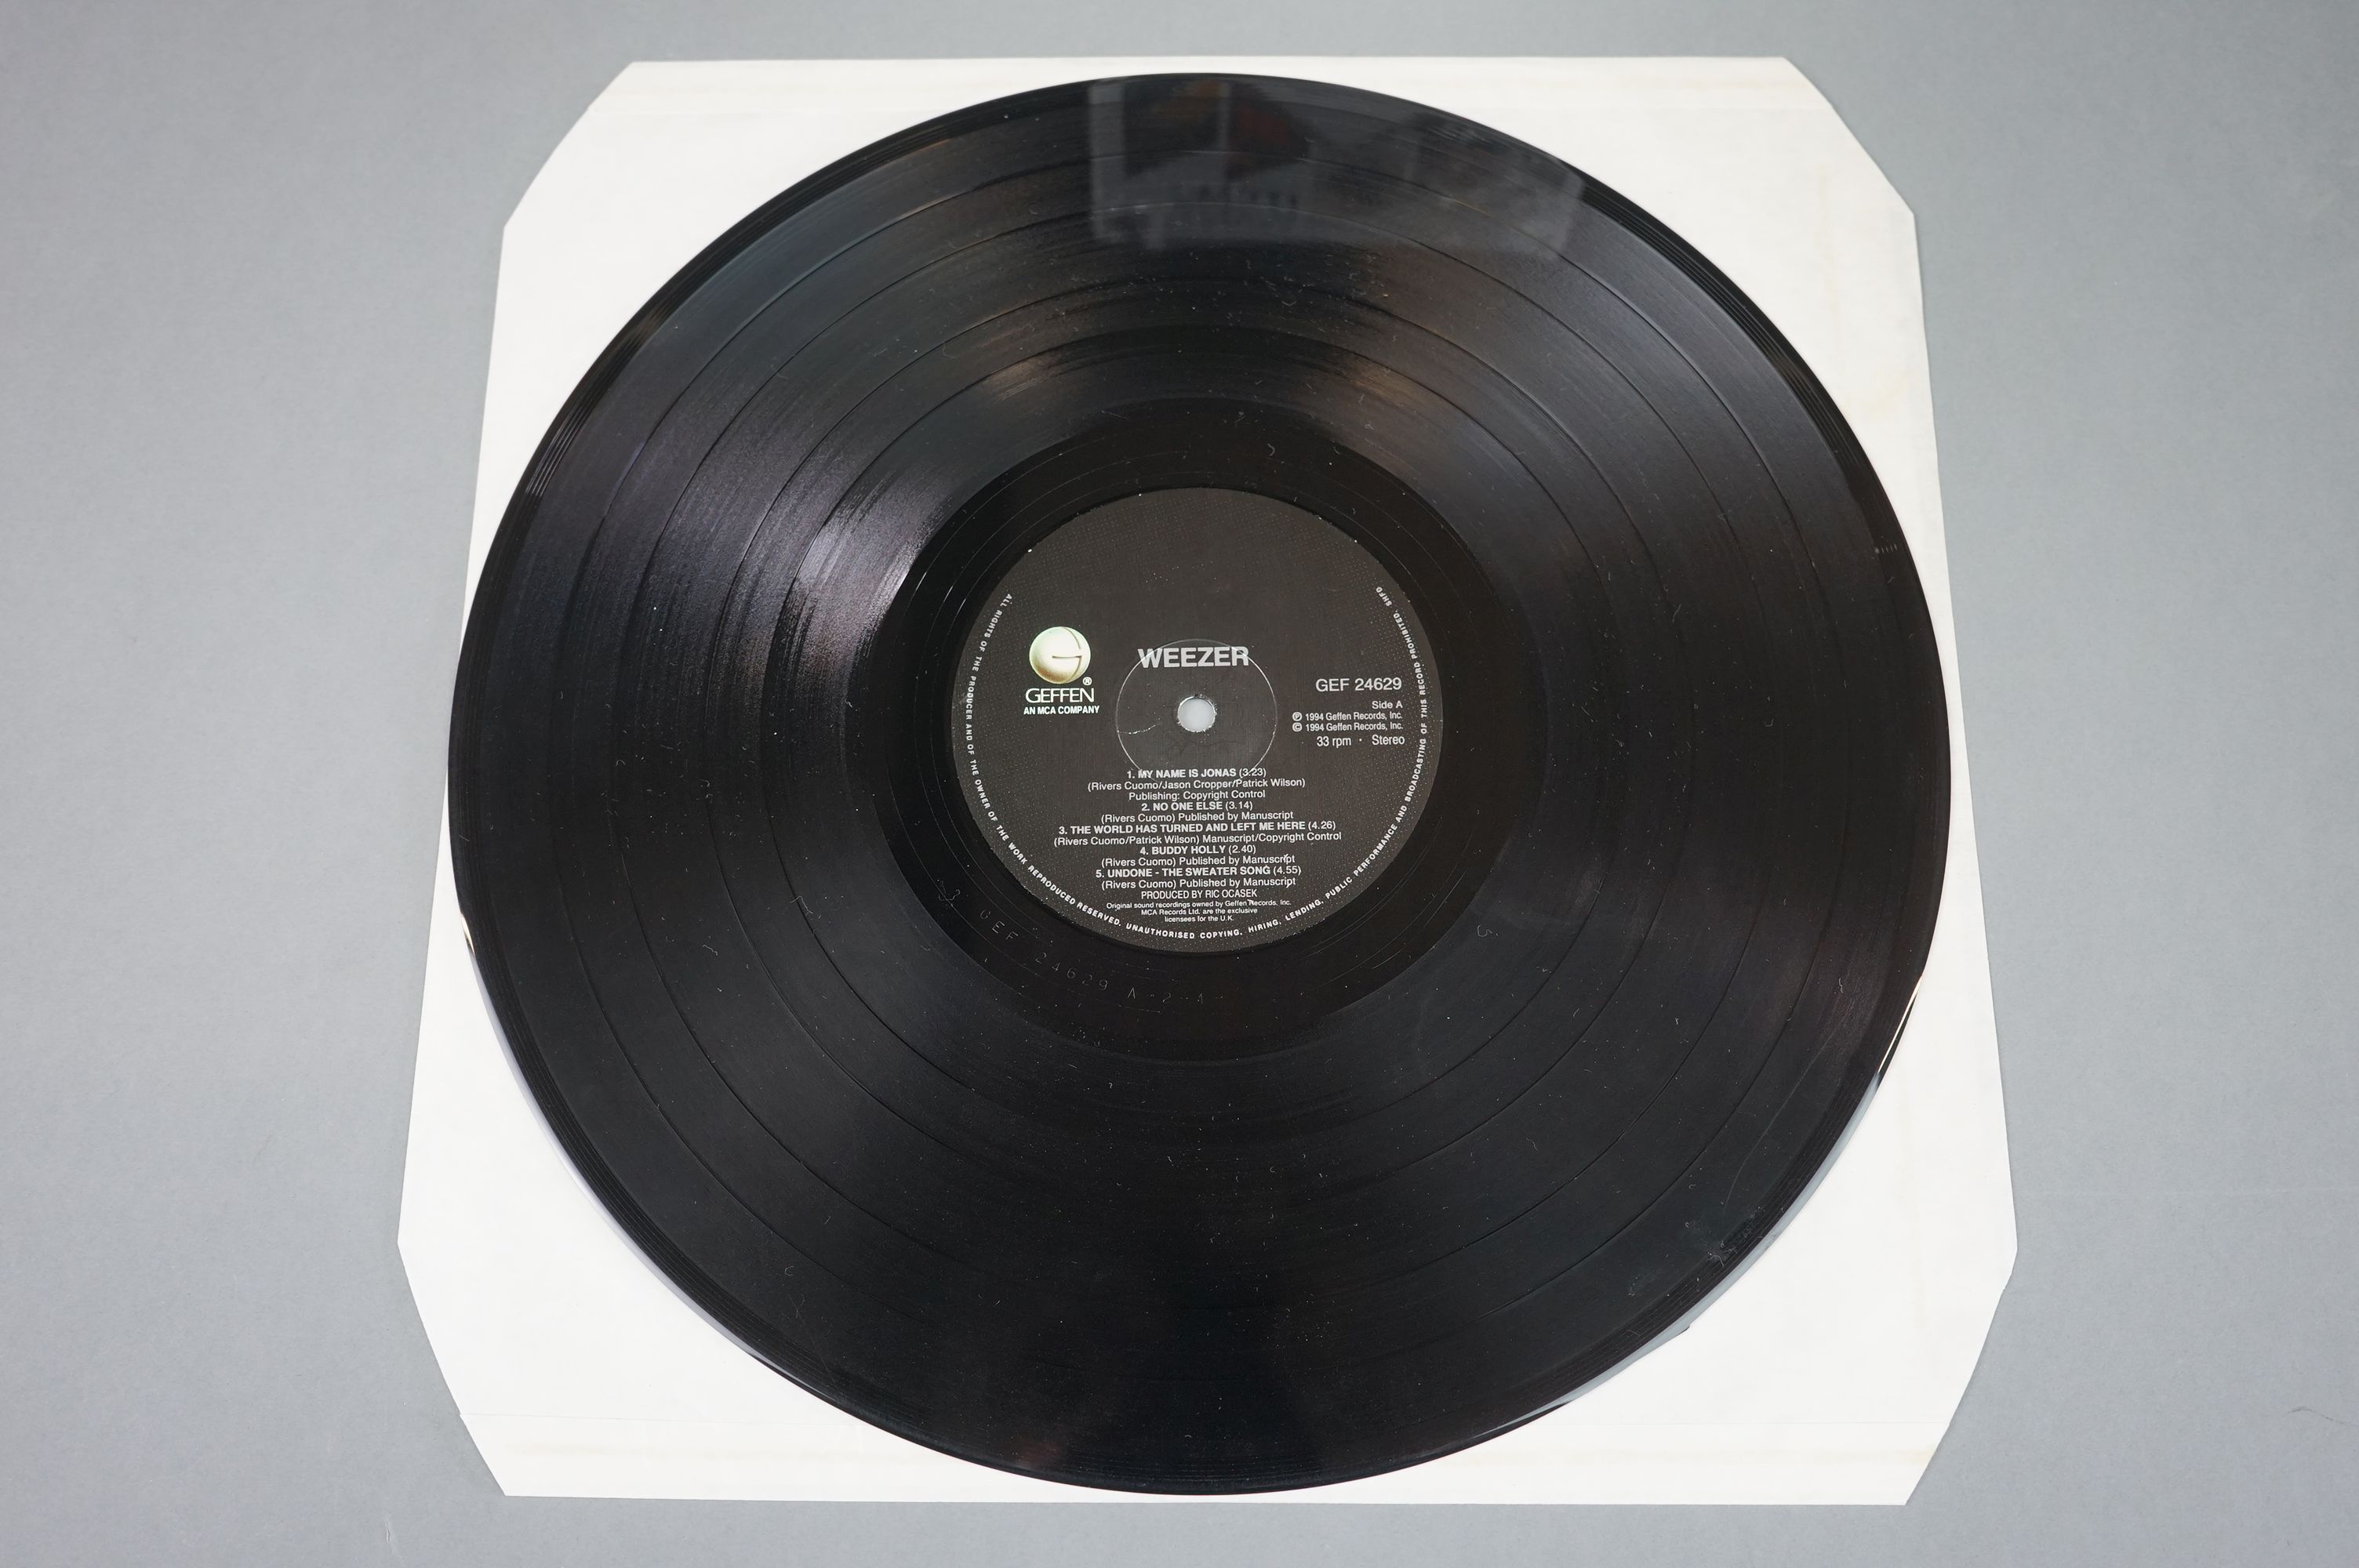 Vinyl - Weezer self titled LP special pressing Time Bomb on Geffen GEF24629, vg++ - Image 4 of 5